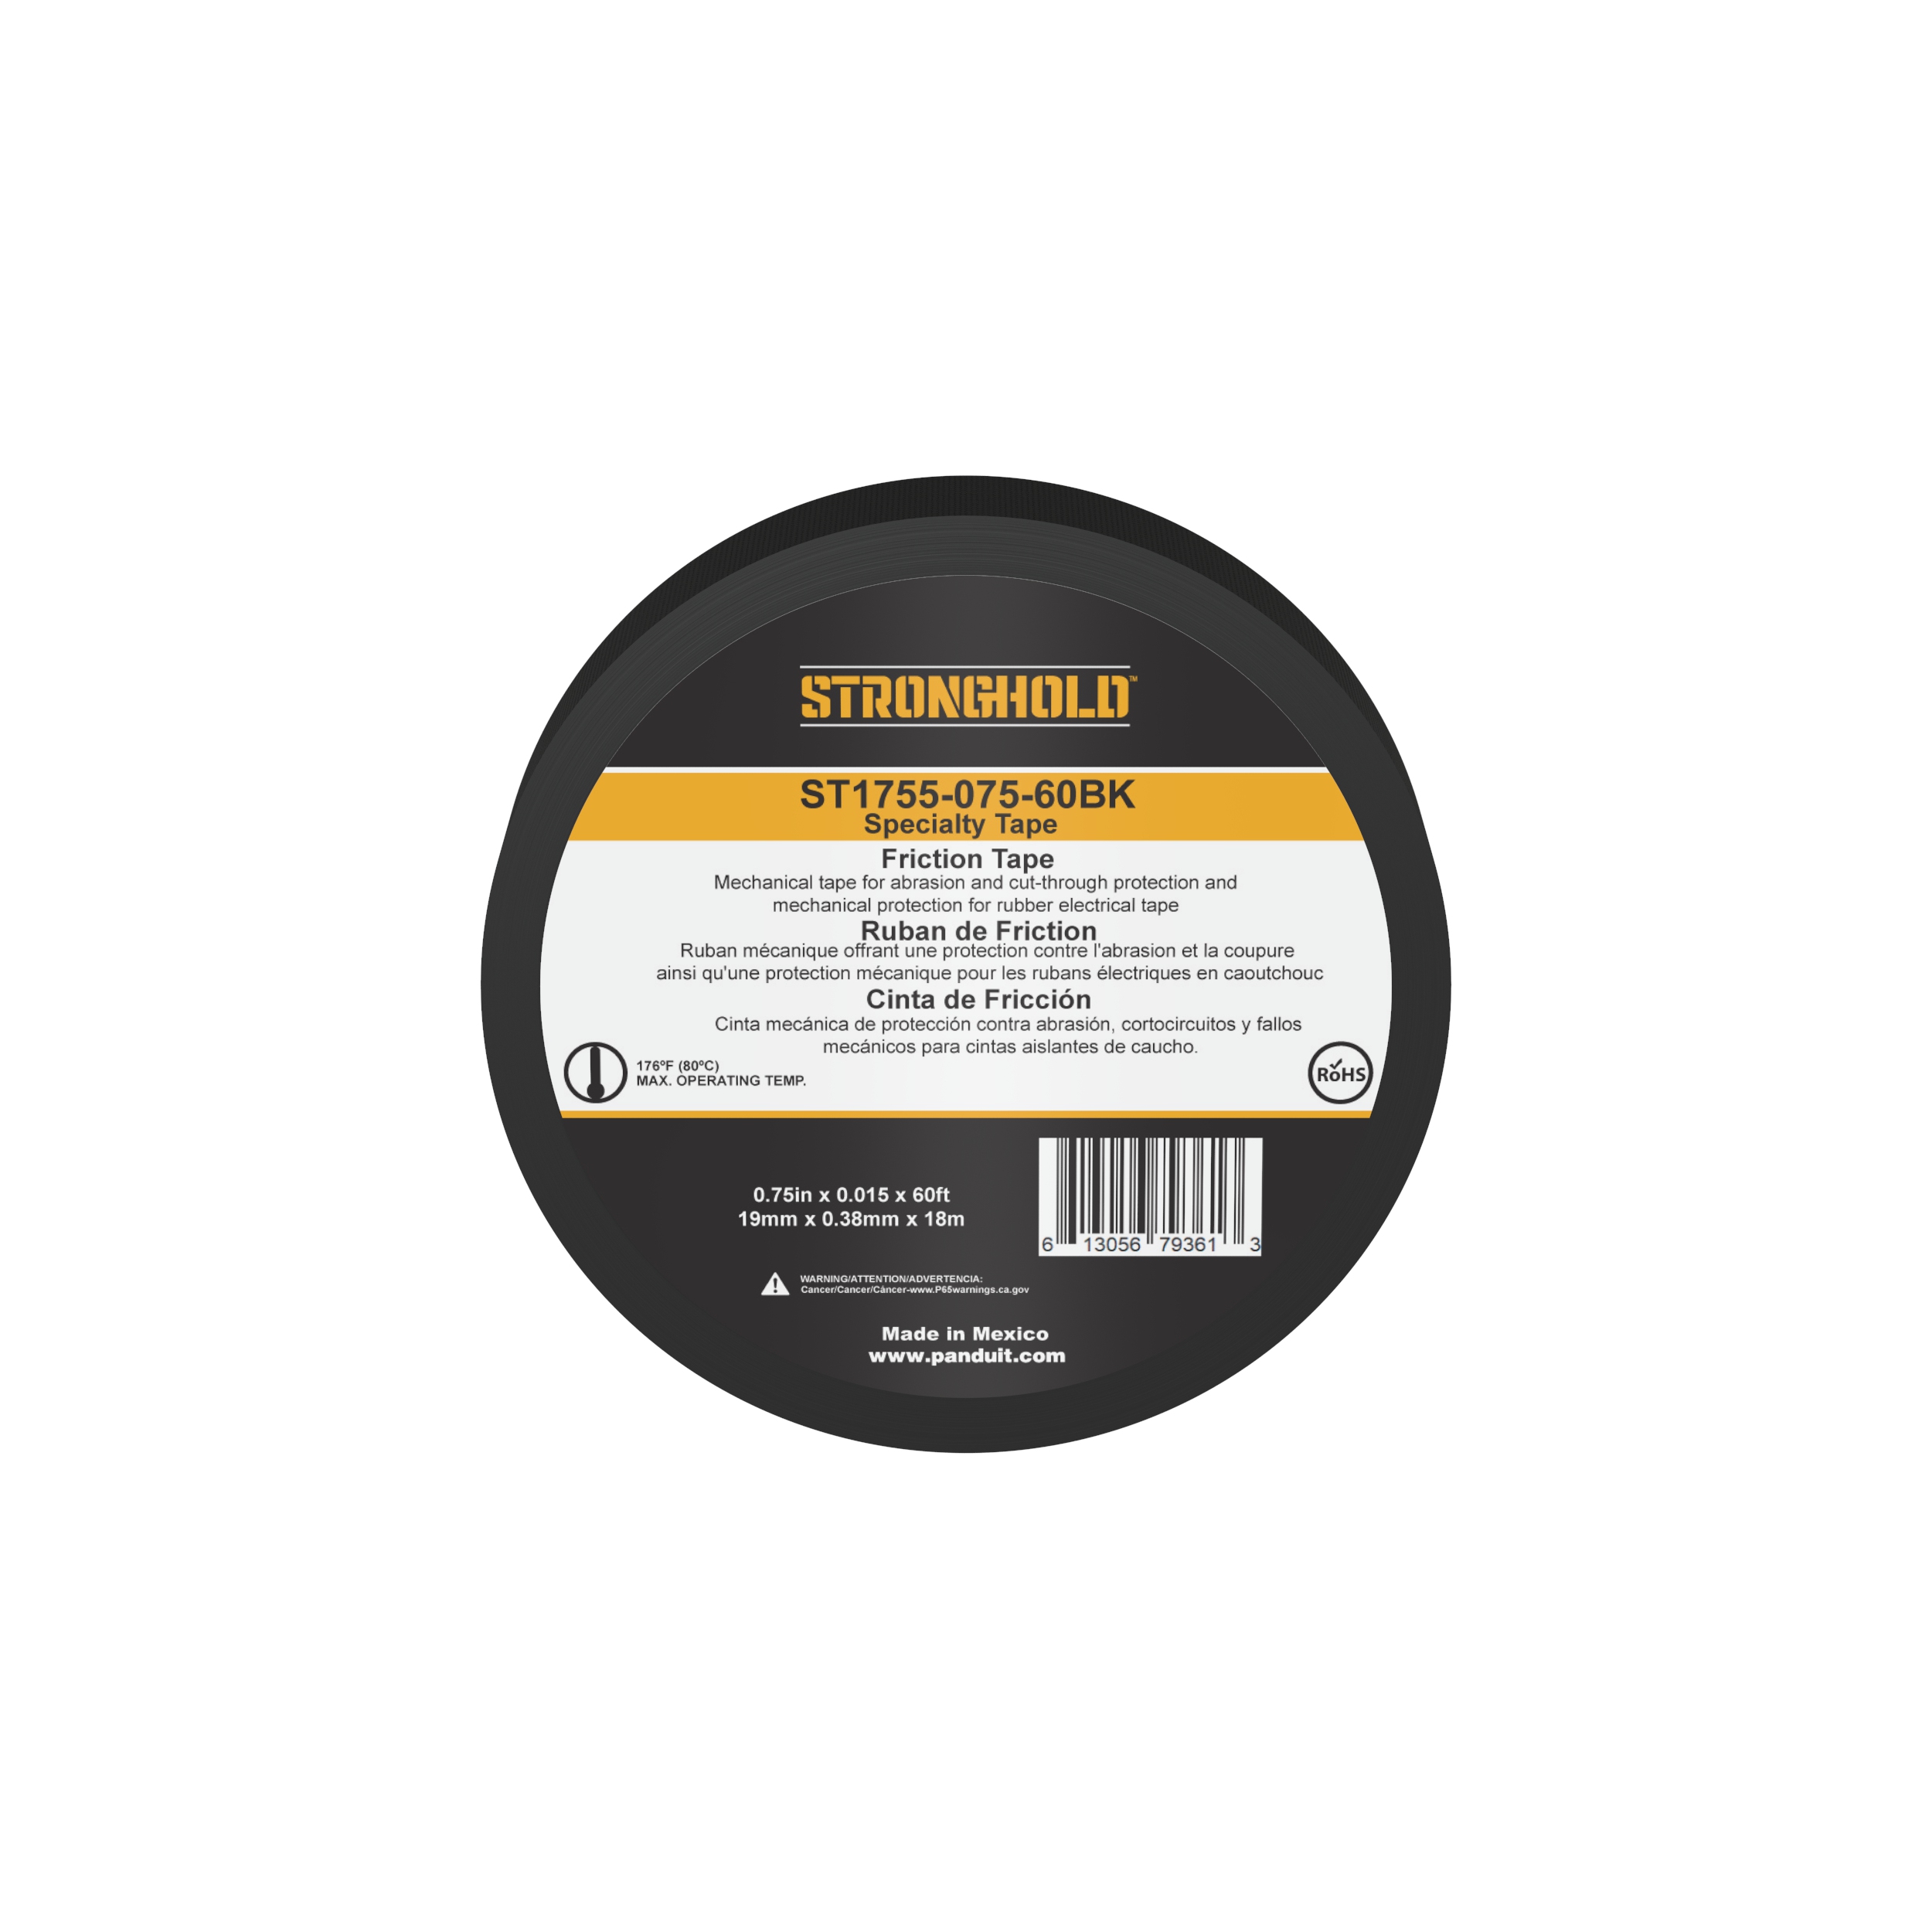 StrongHold™ ST1755-075-60BK Specialty, Black, EPDM, Friction Tape, PK1